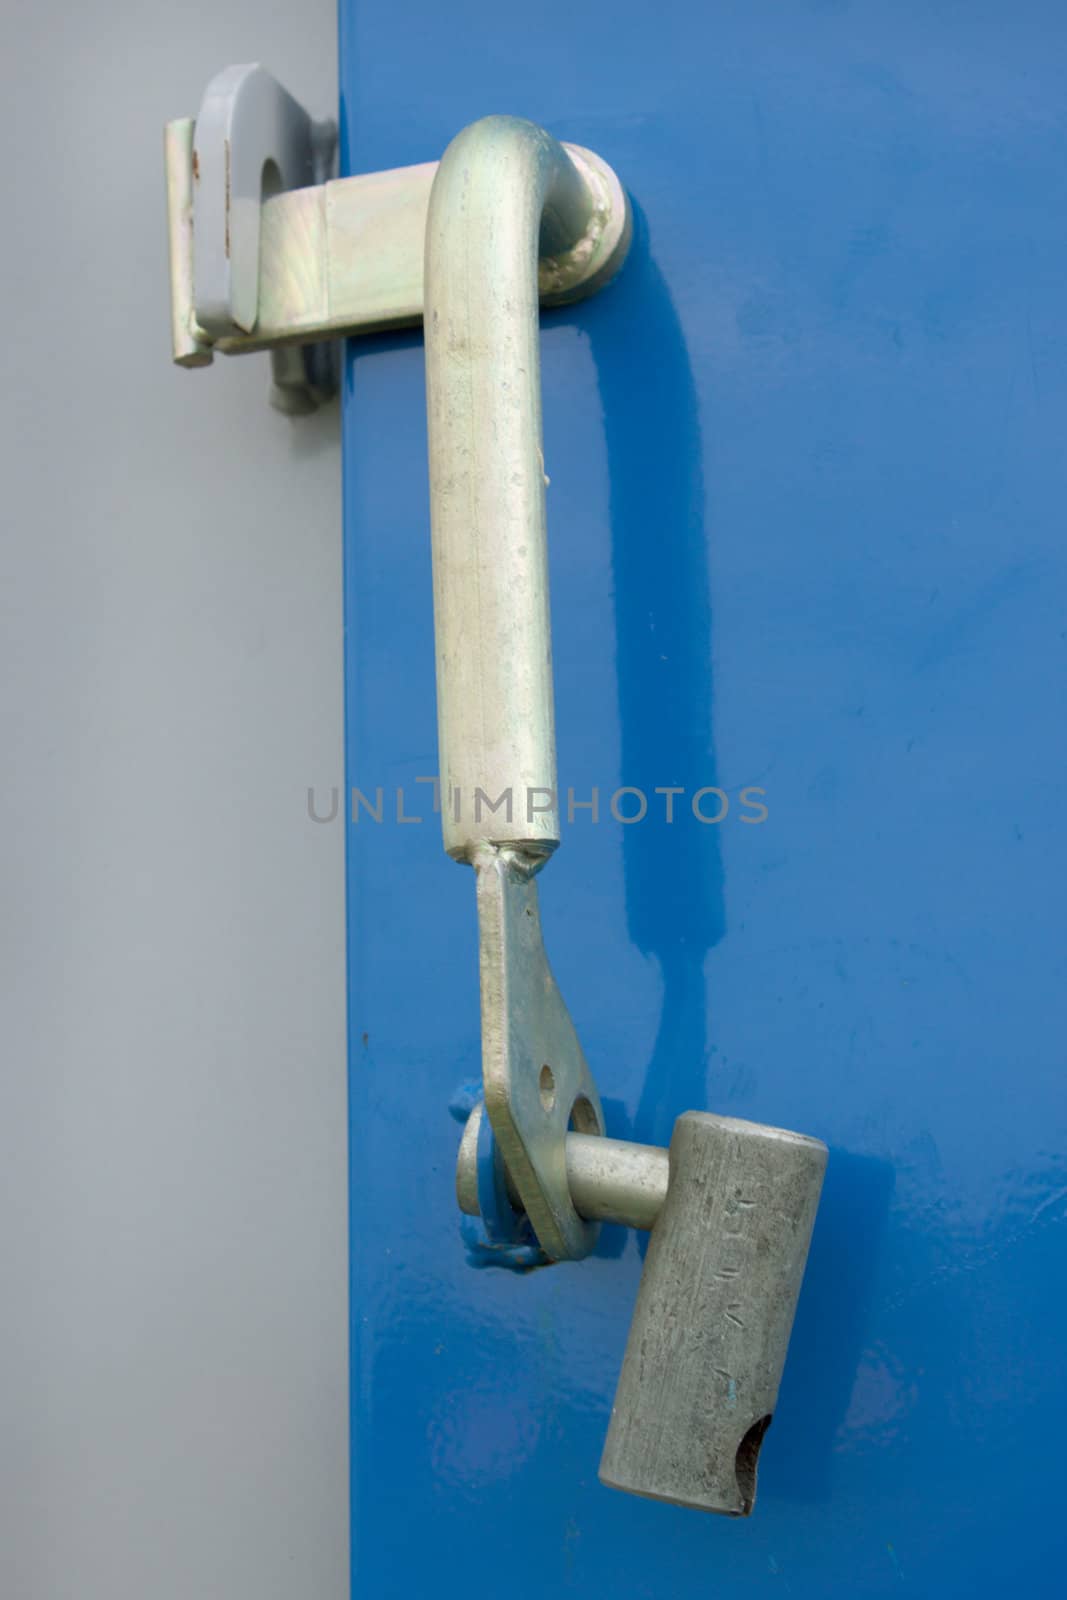 The lock on the door of transformer substation